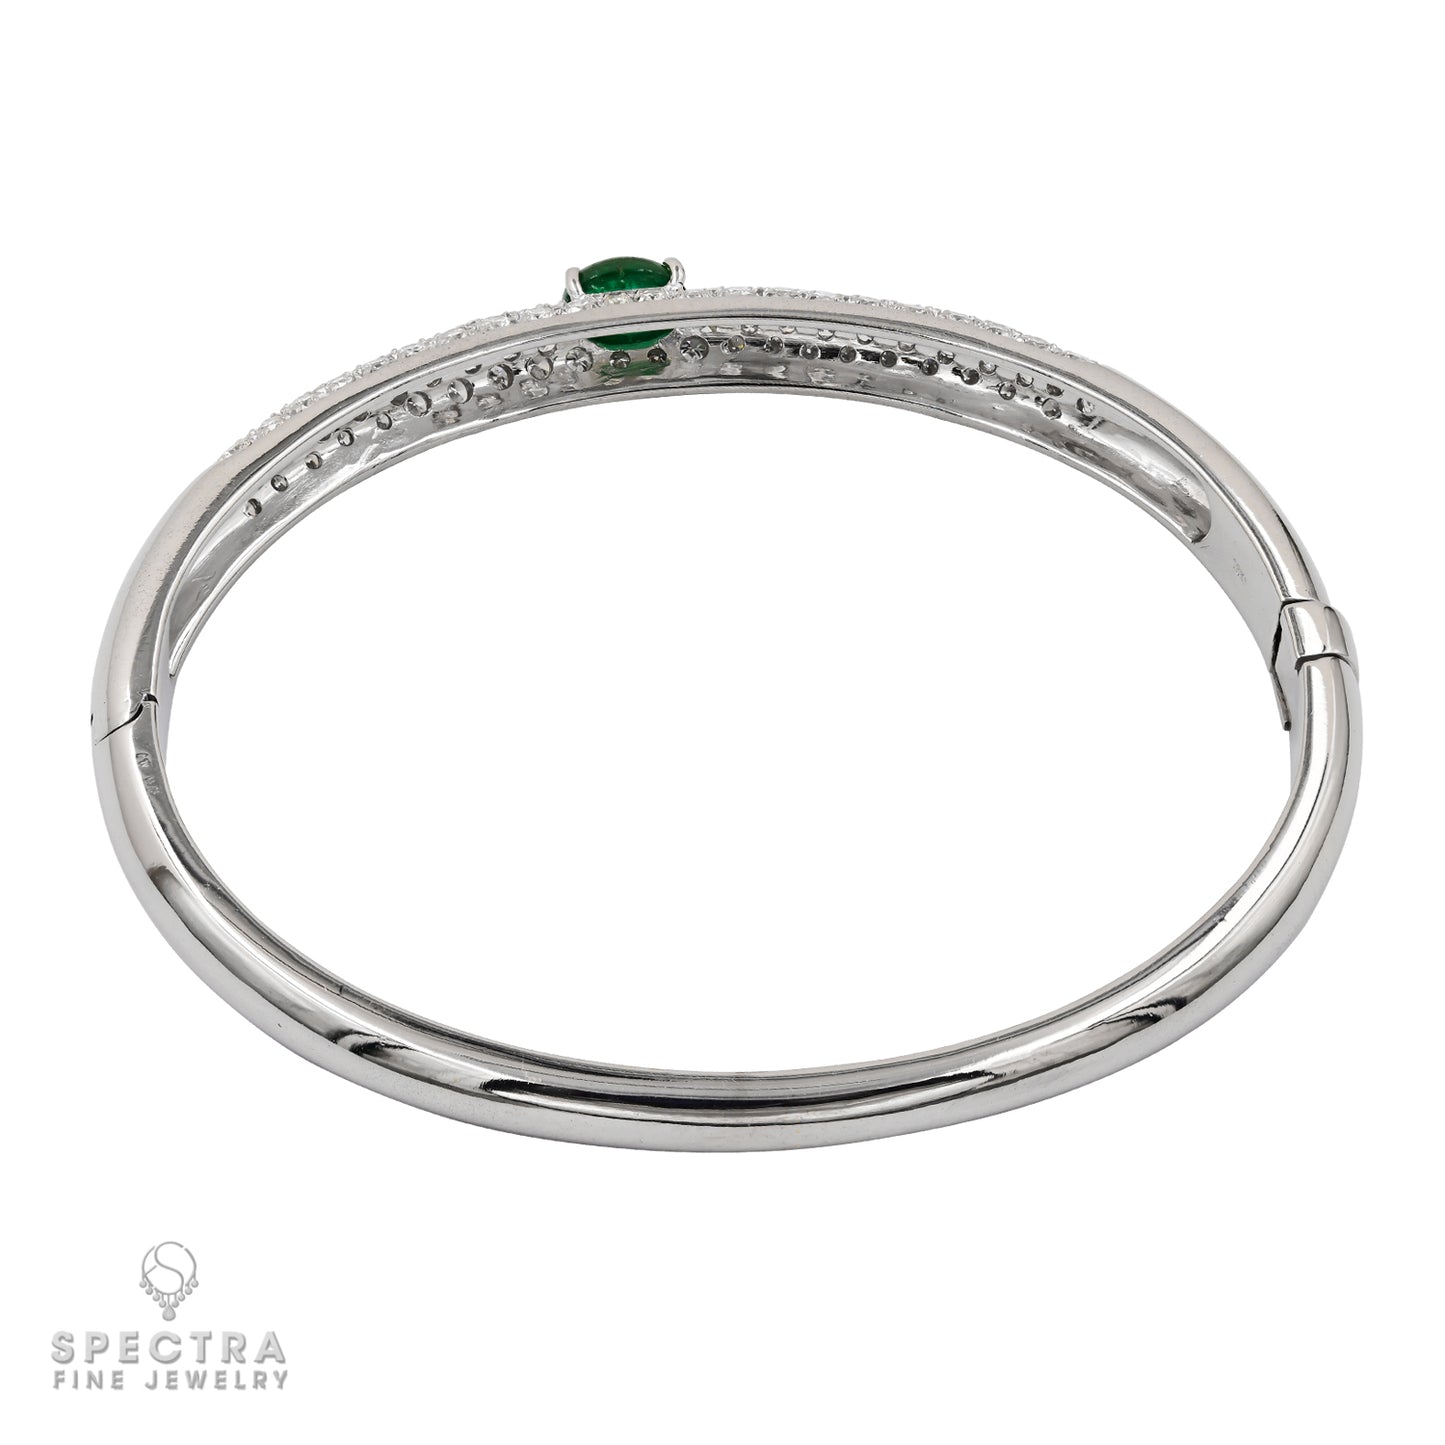 Modern Elegance: Pave Bombe Bangle with Oval Emeralds